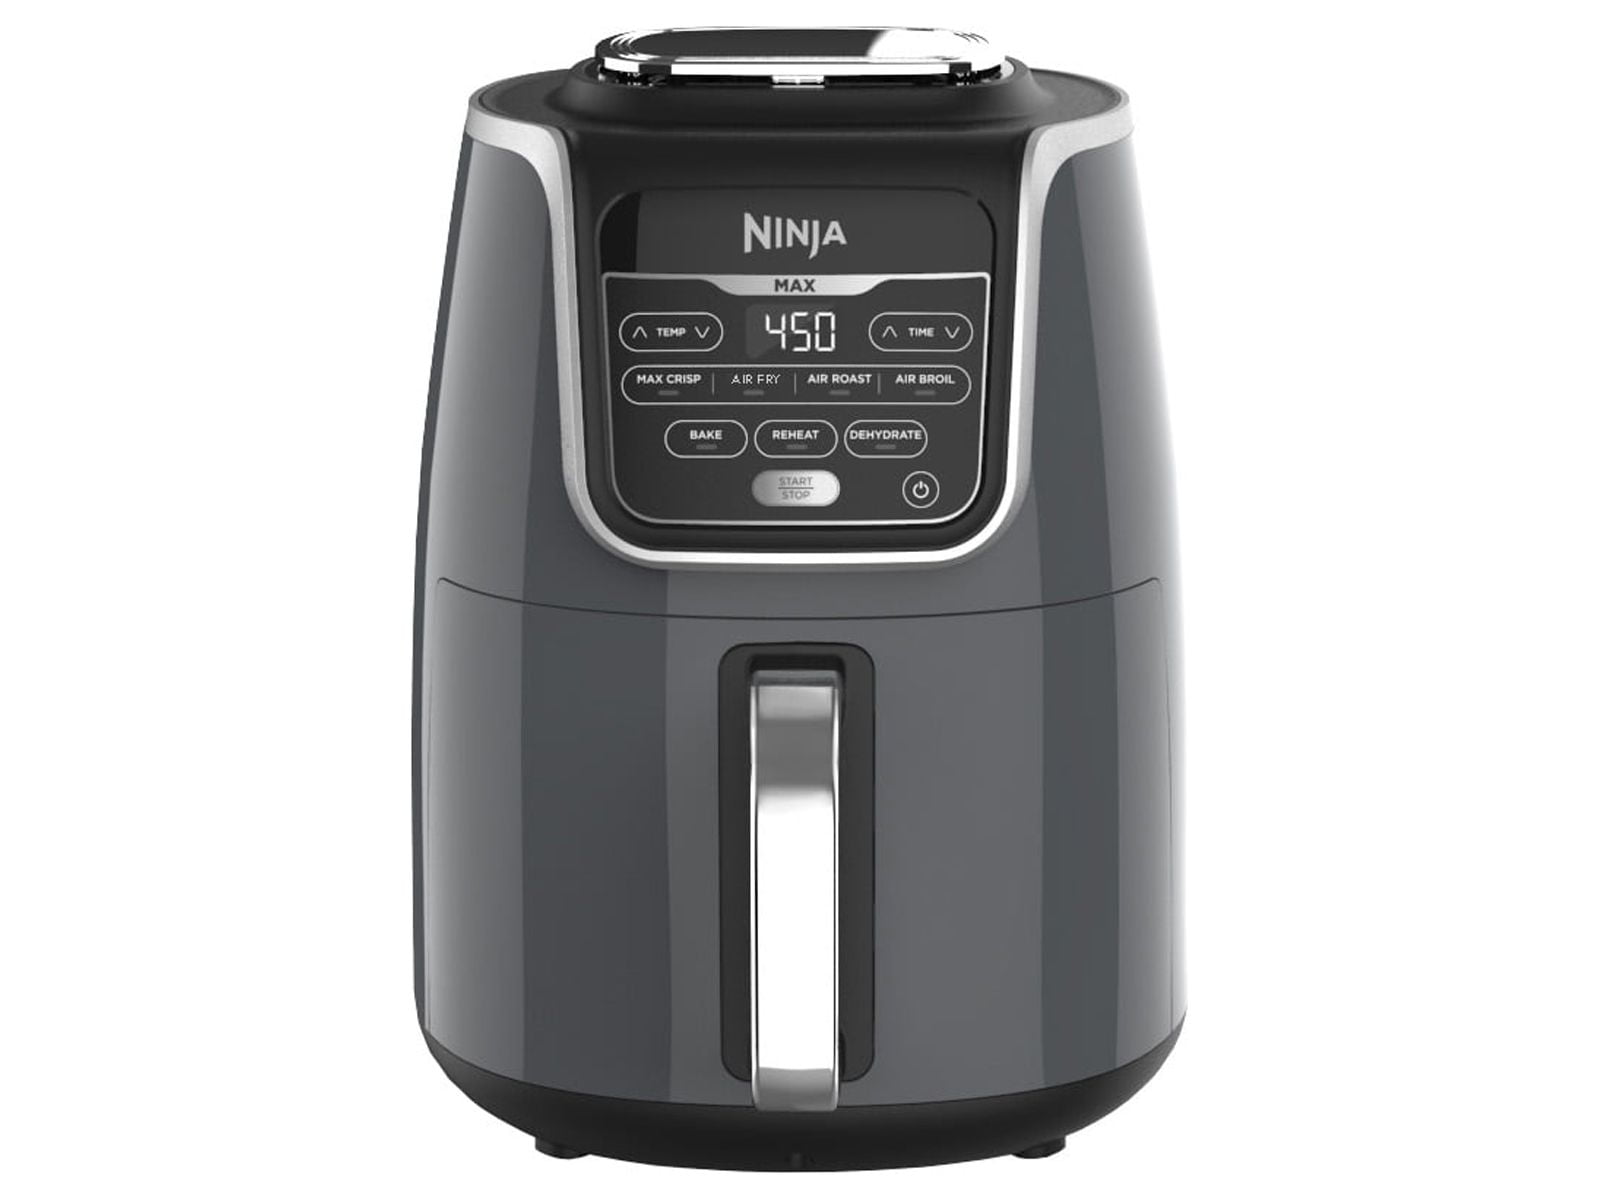 ninja af161 max xl air fryer, 5.5-quart, grey - USED 622356559133